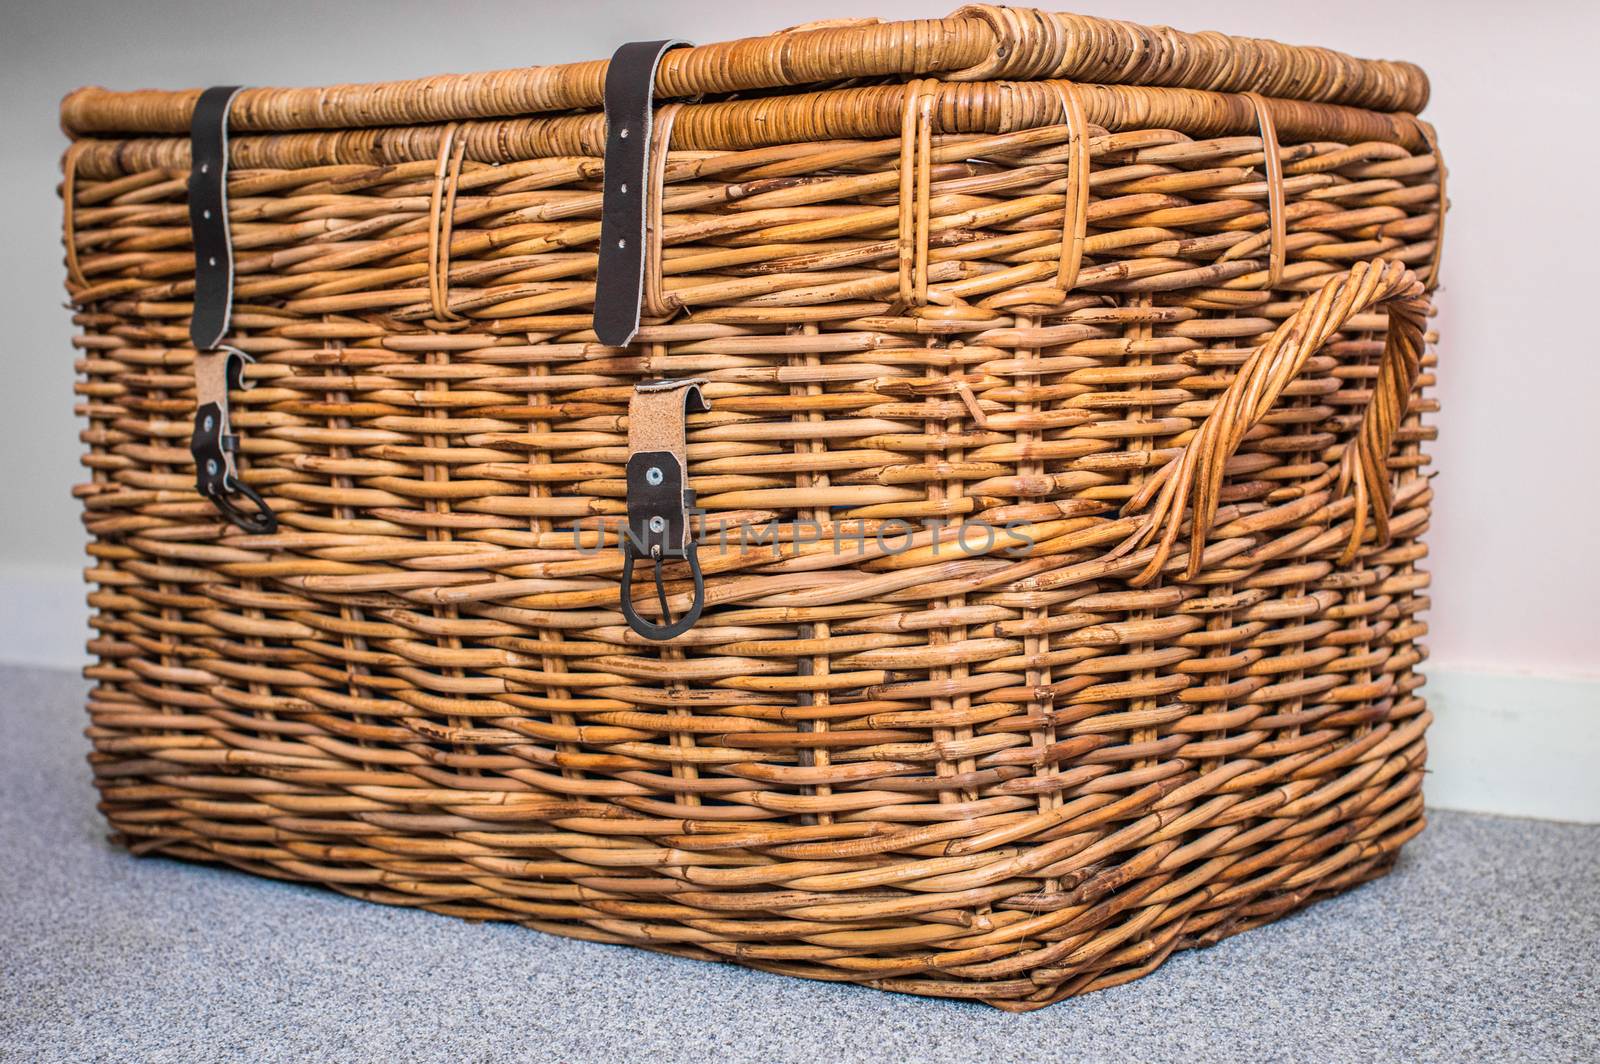 Wicker basket on the background by okskukuruza